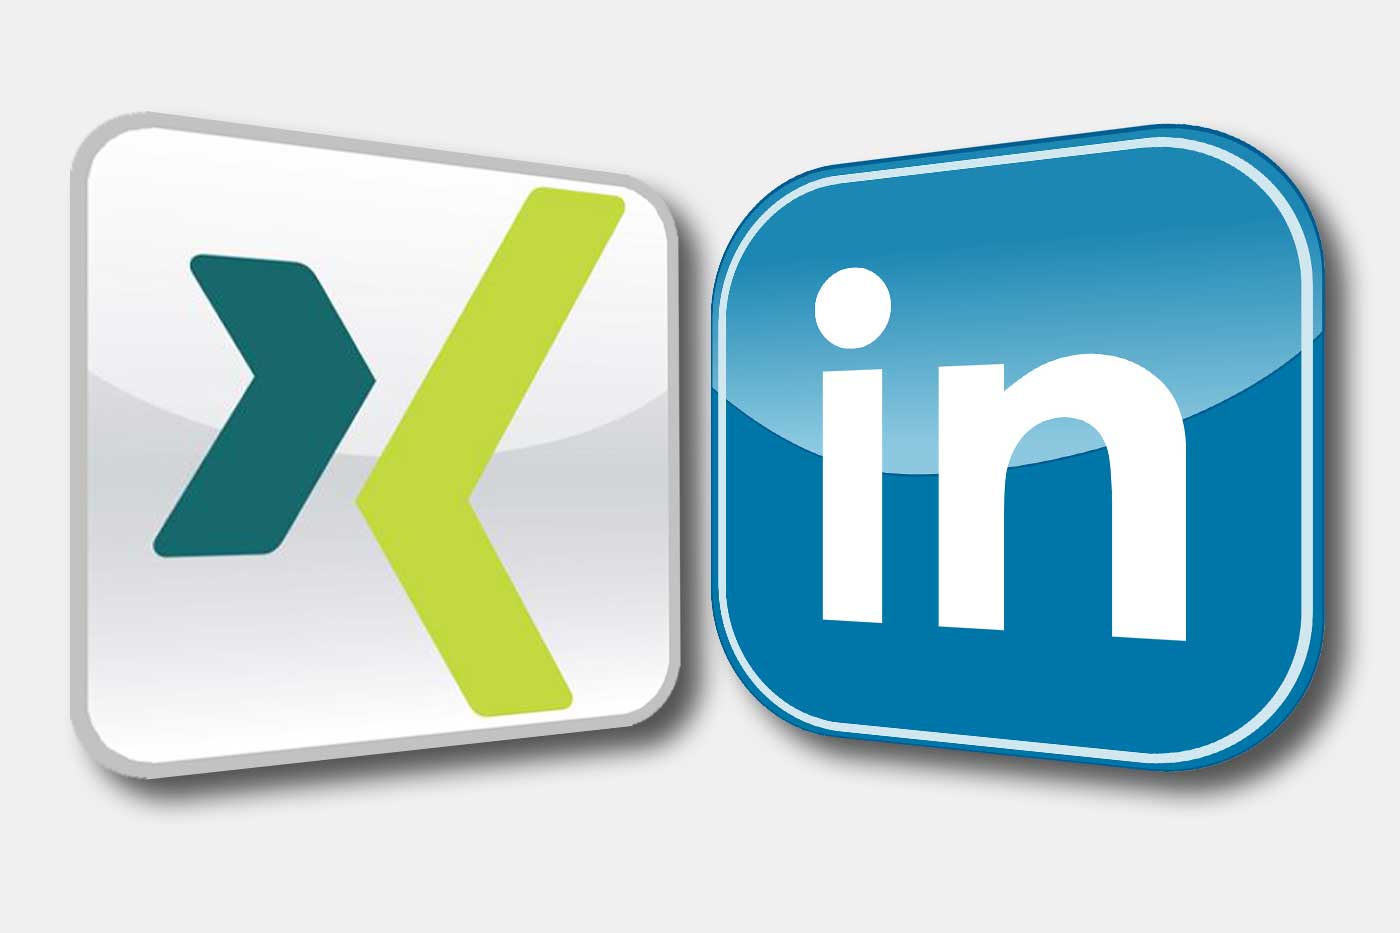 Logo Xing en logo LinkedIn